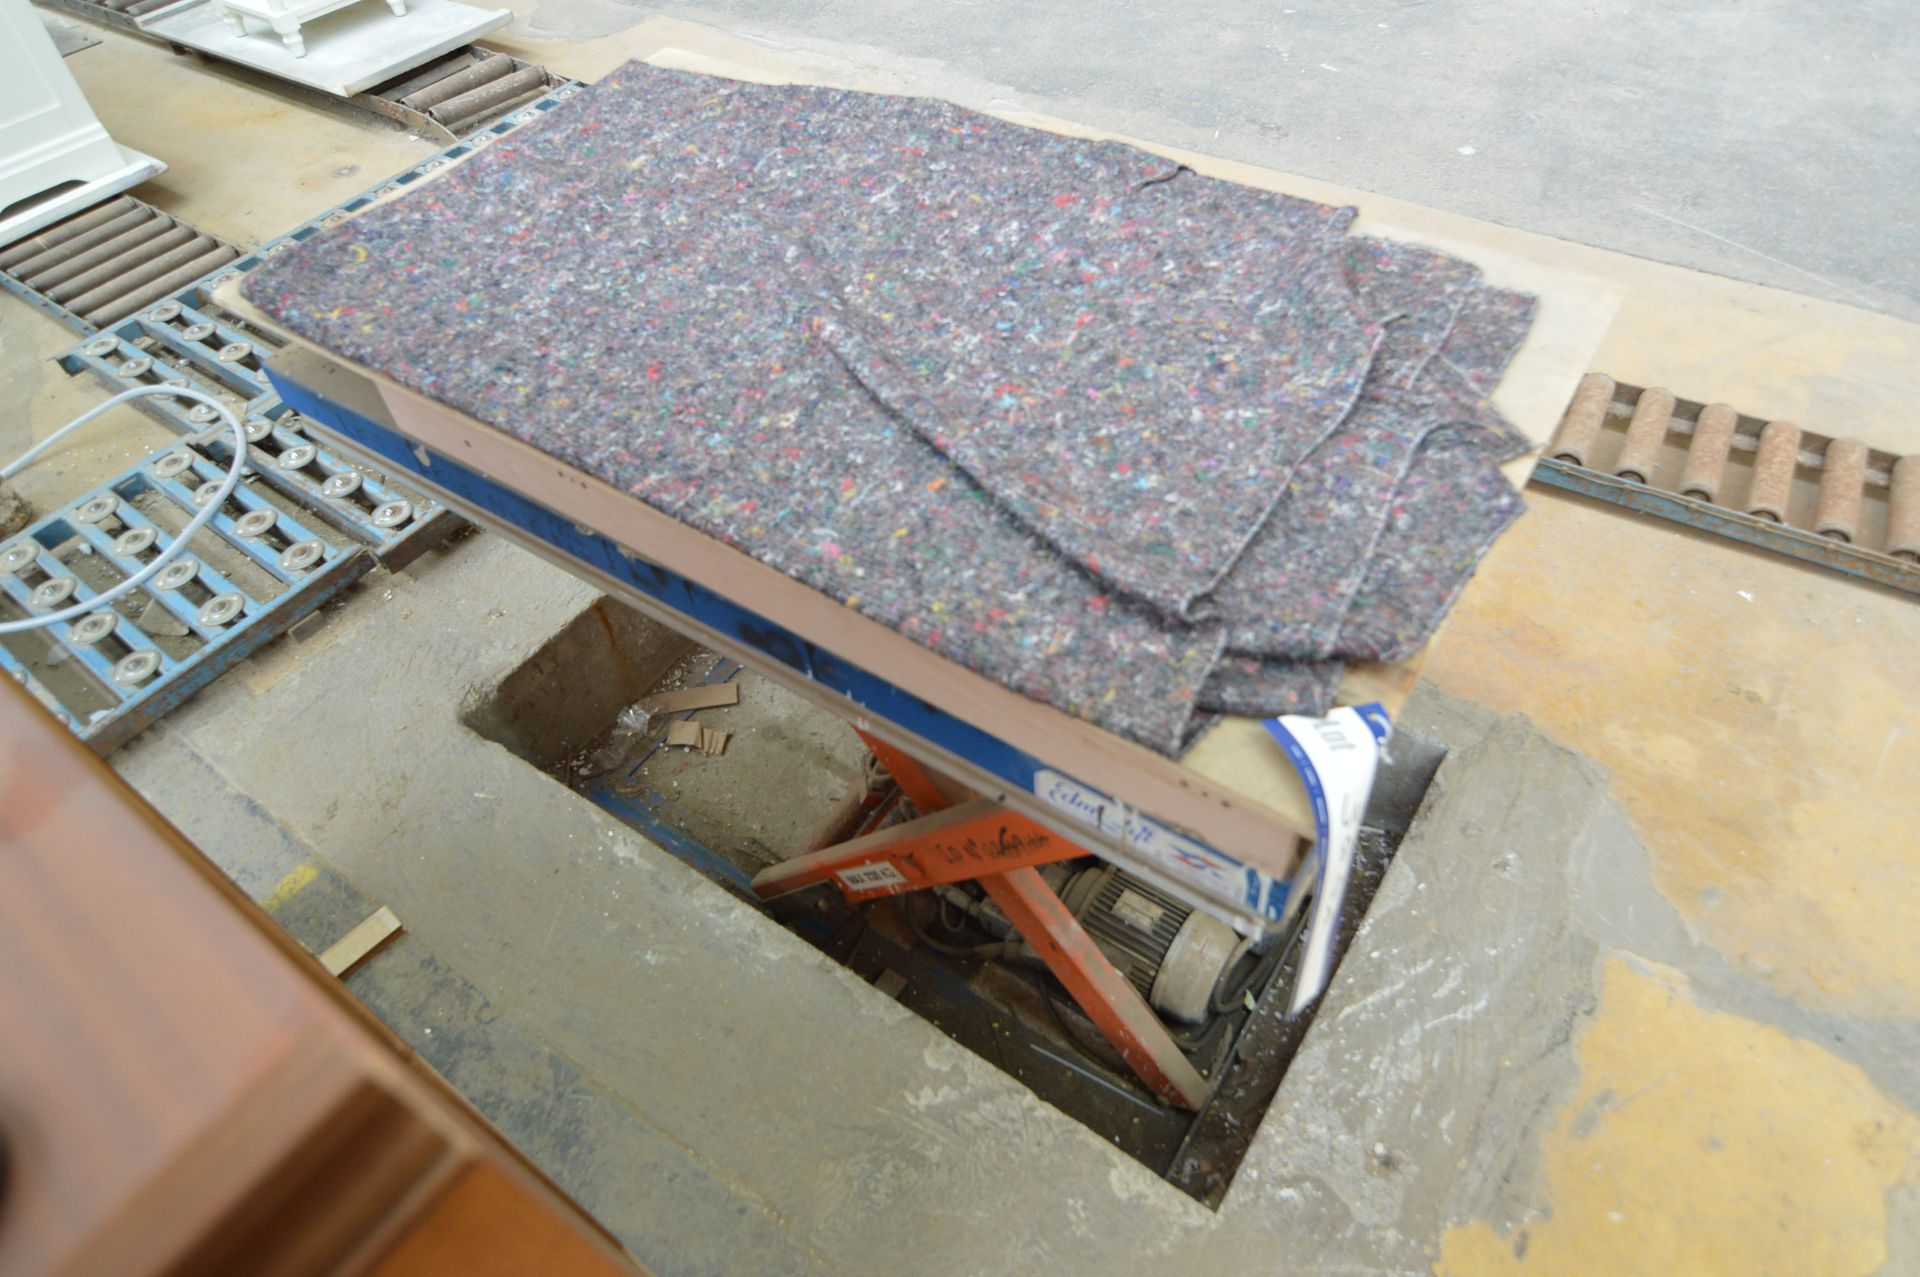 Edmo 1000kg cap. Scissor Lift Table, approx. 1300mm x 700mm, with 450mm wide roller conveyor